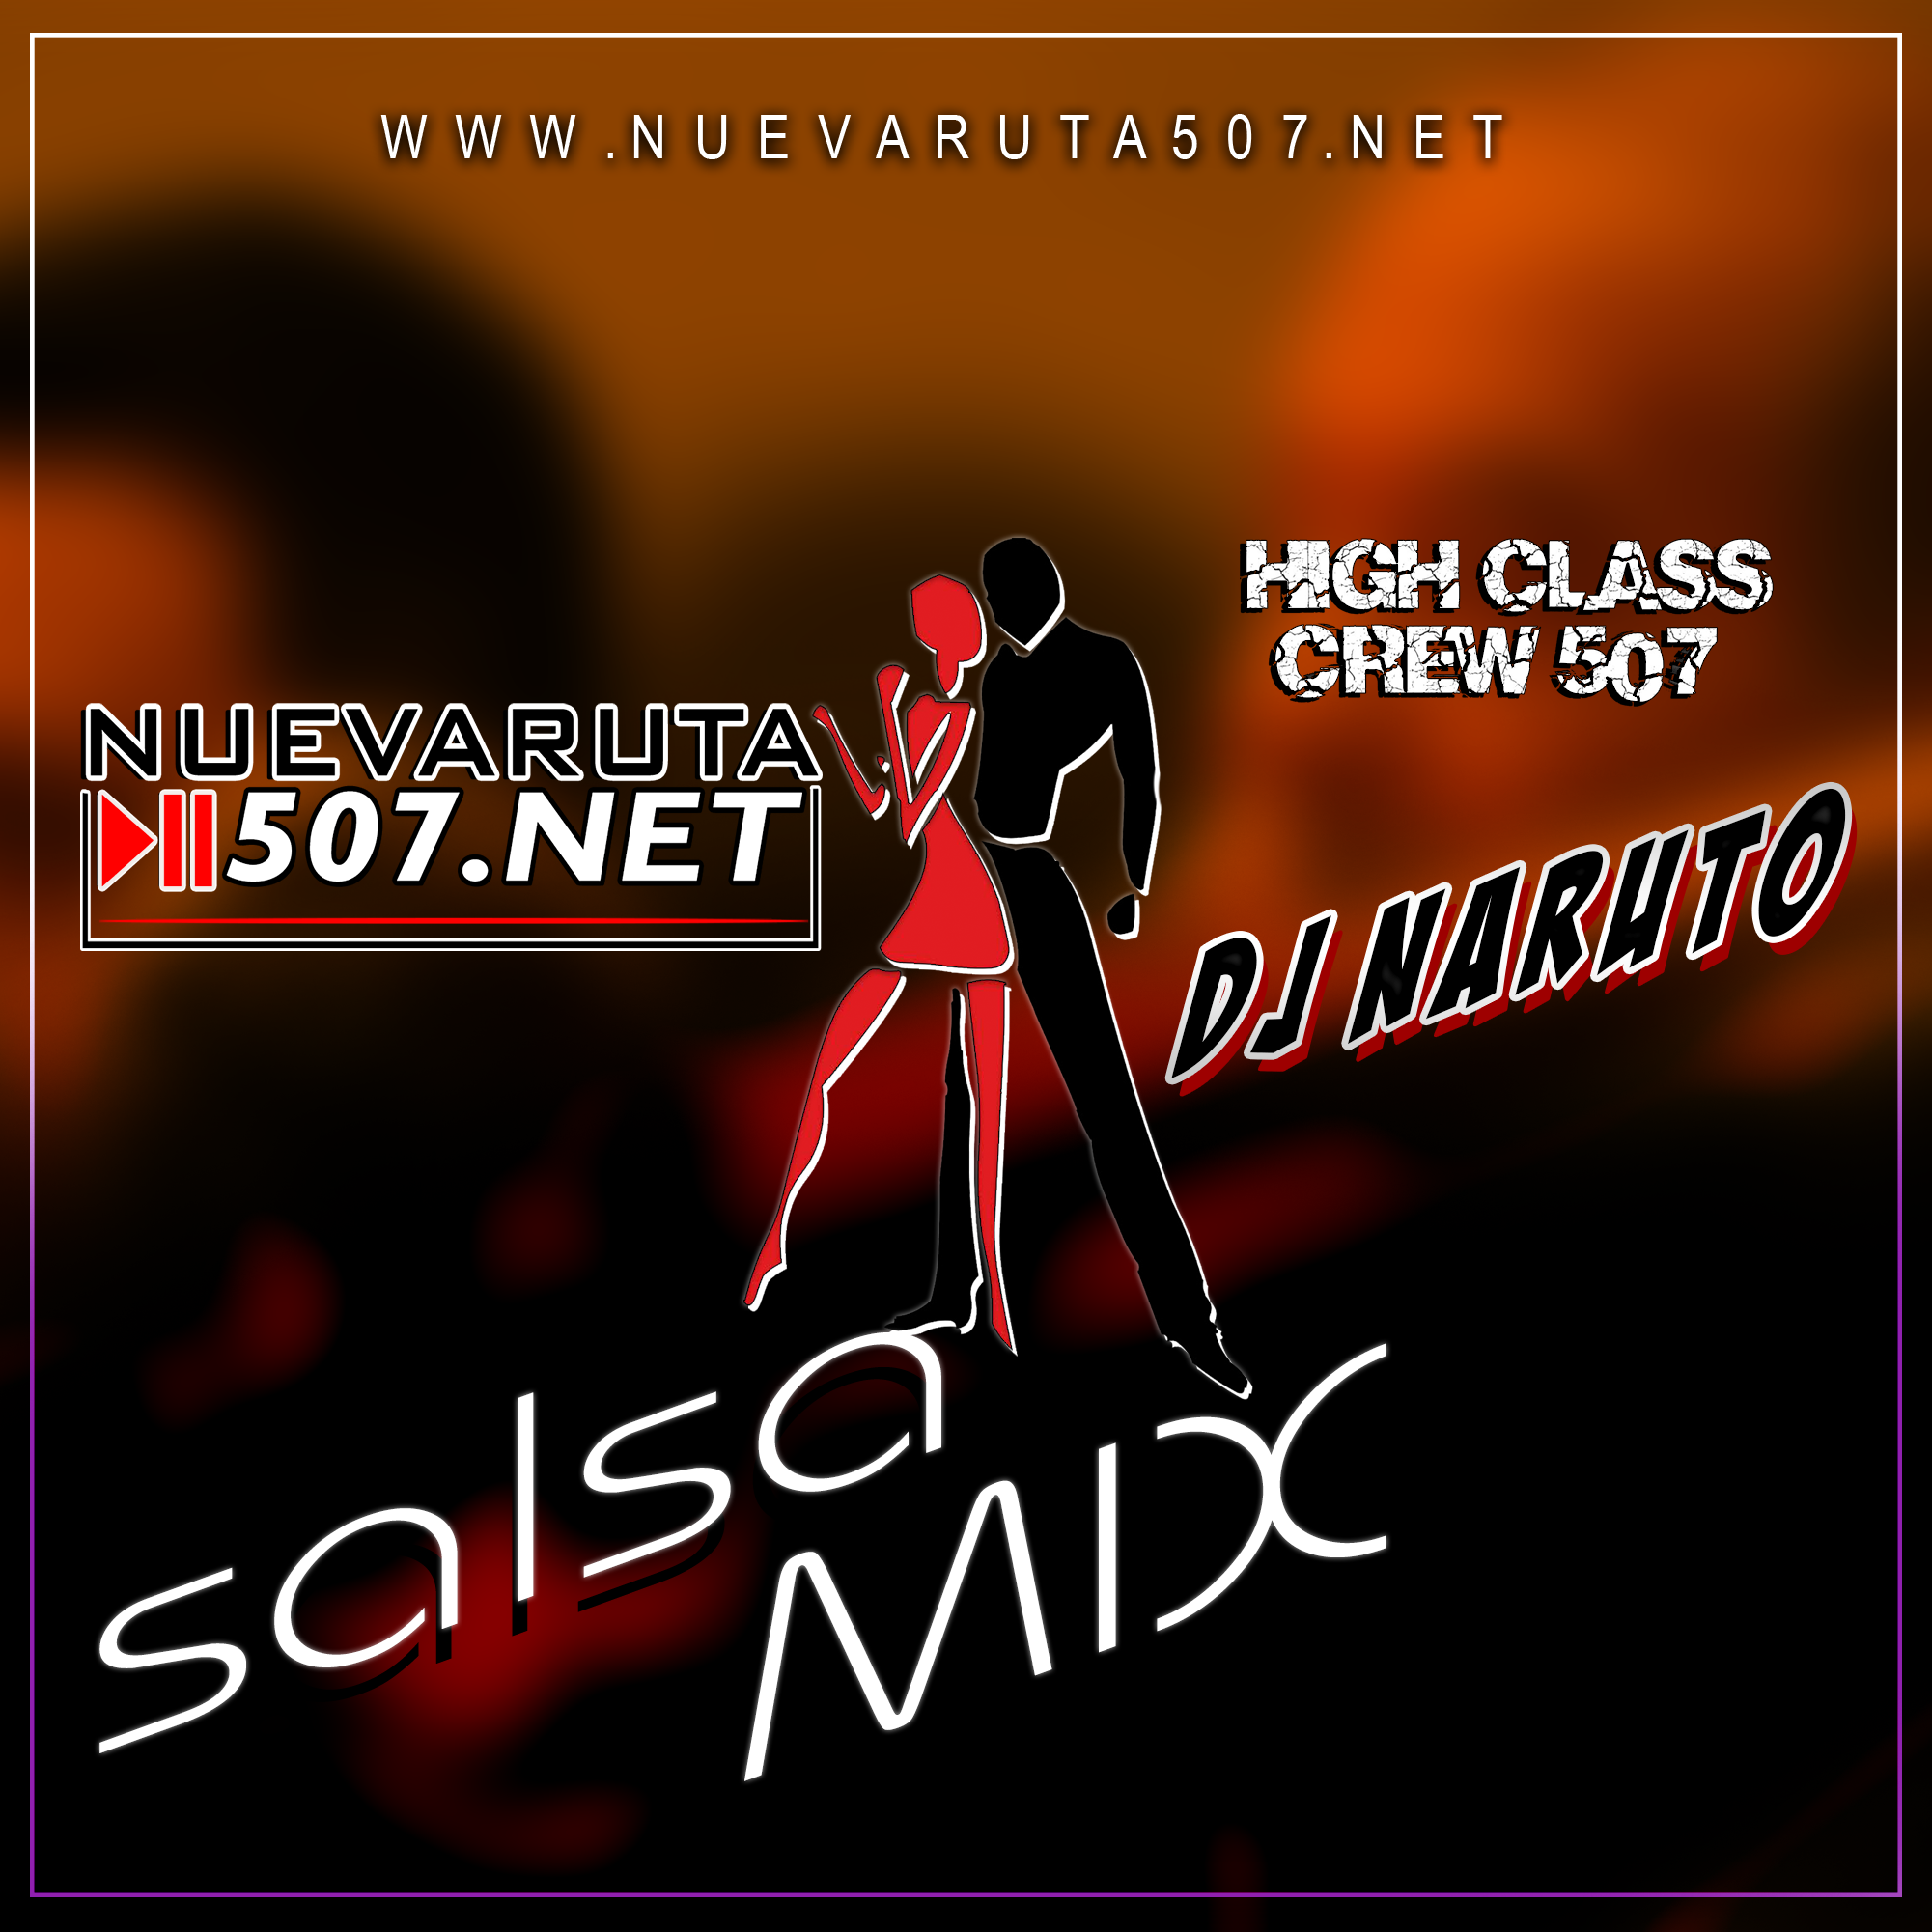 Dj Naruto - Salsa Mix.mp3